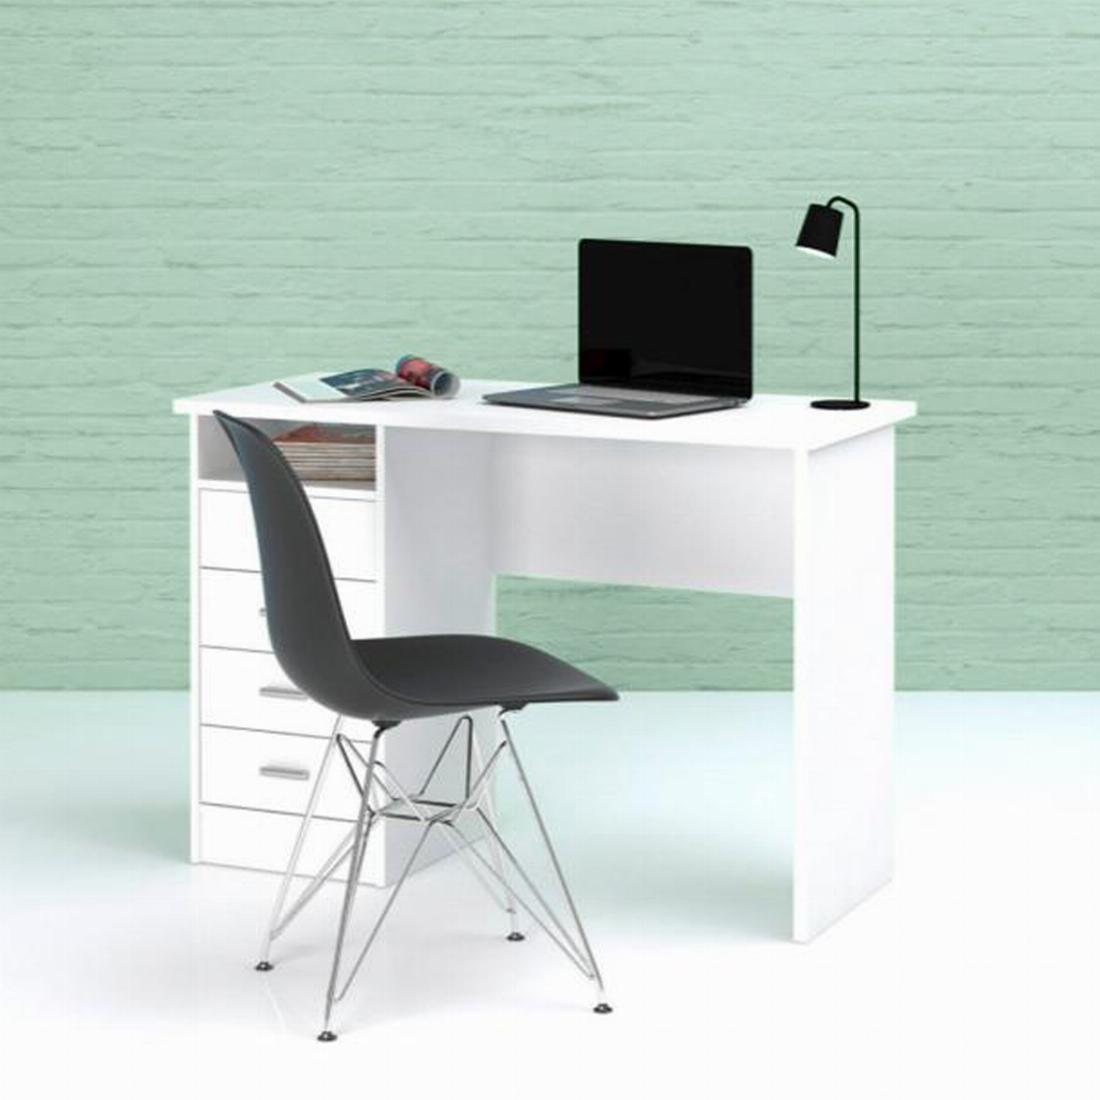 Function Plus 4 Drawer Desk in White